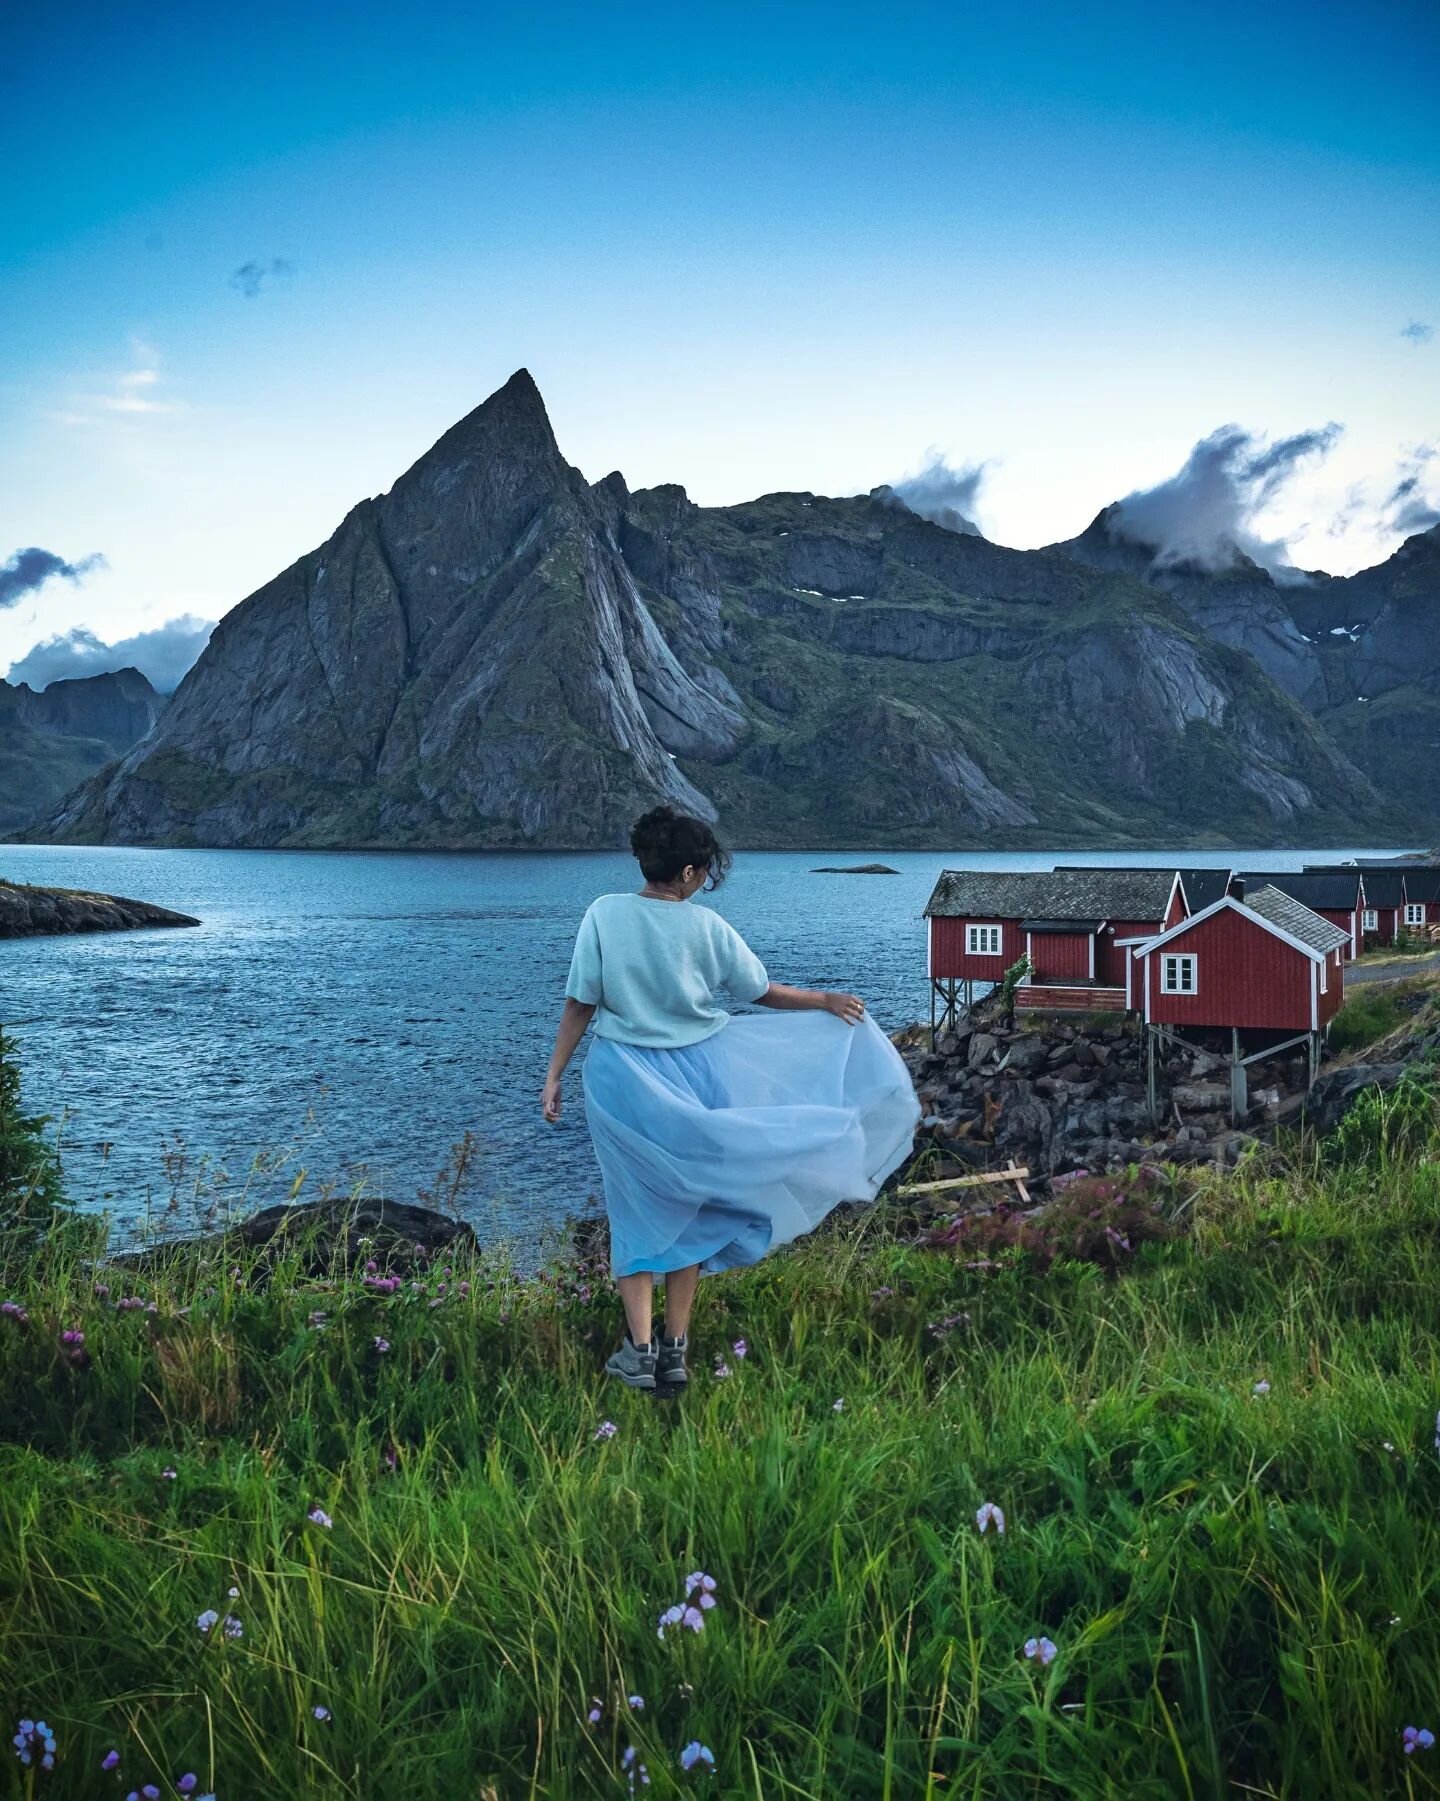 Aren't we all born to explore places like these!? 😍 Norway, you beauty 😍❤️
#Norway #TripCouple
#sonyalpha #sonyalphain #norway🇳🇴 #lofoten #lofotenislands  #reine #midnightsun